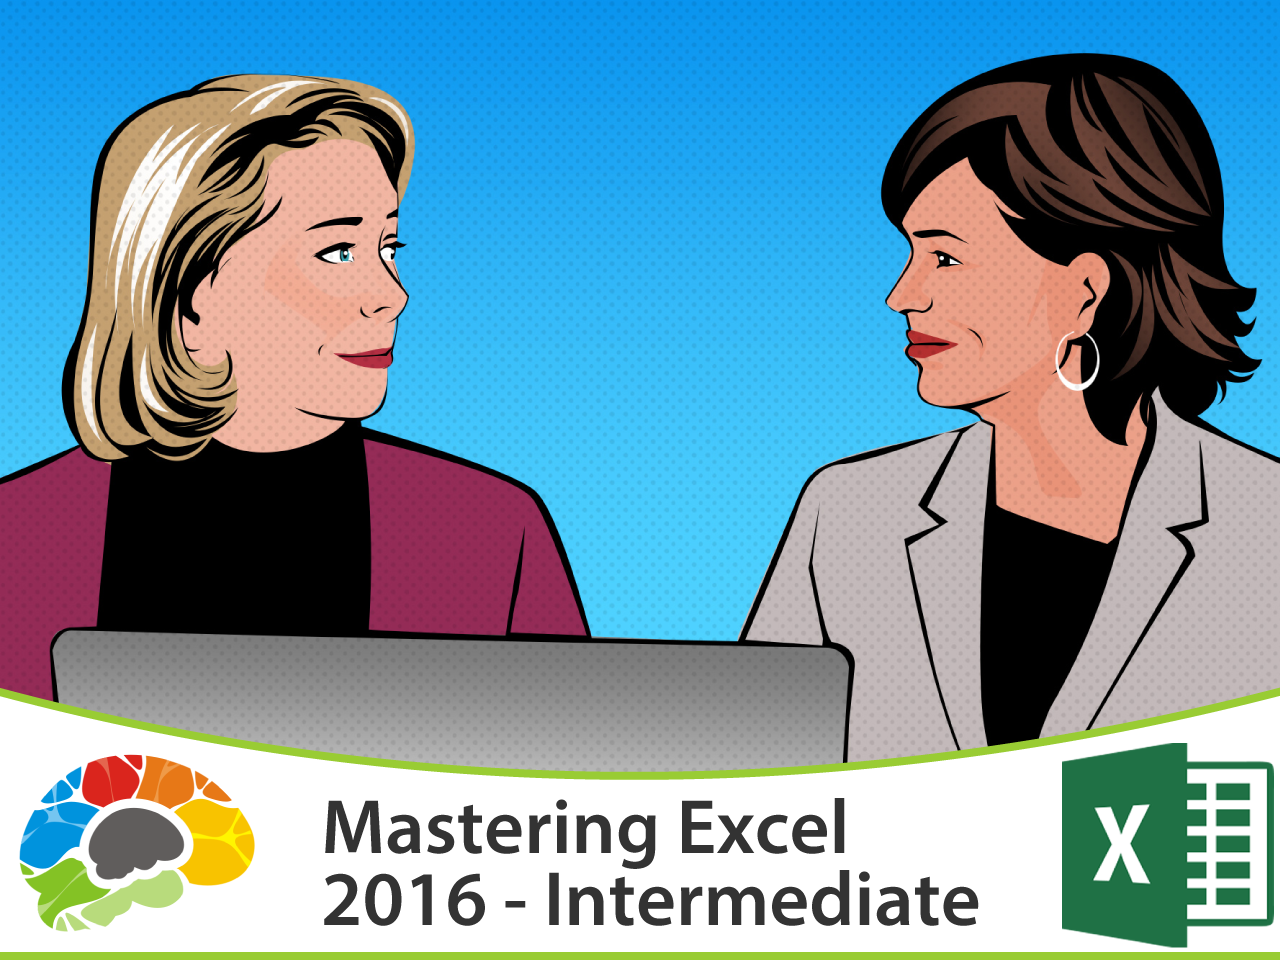 Mastering Excel 2016, Singapore SKillsFuture elarning online course